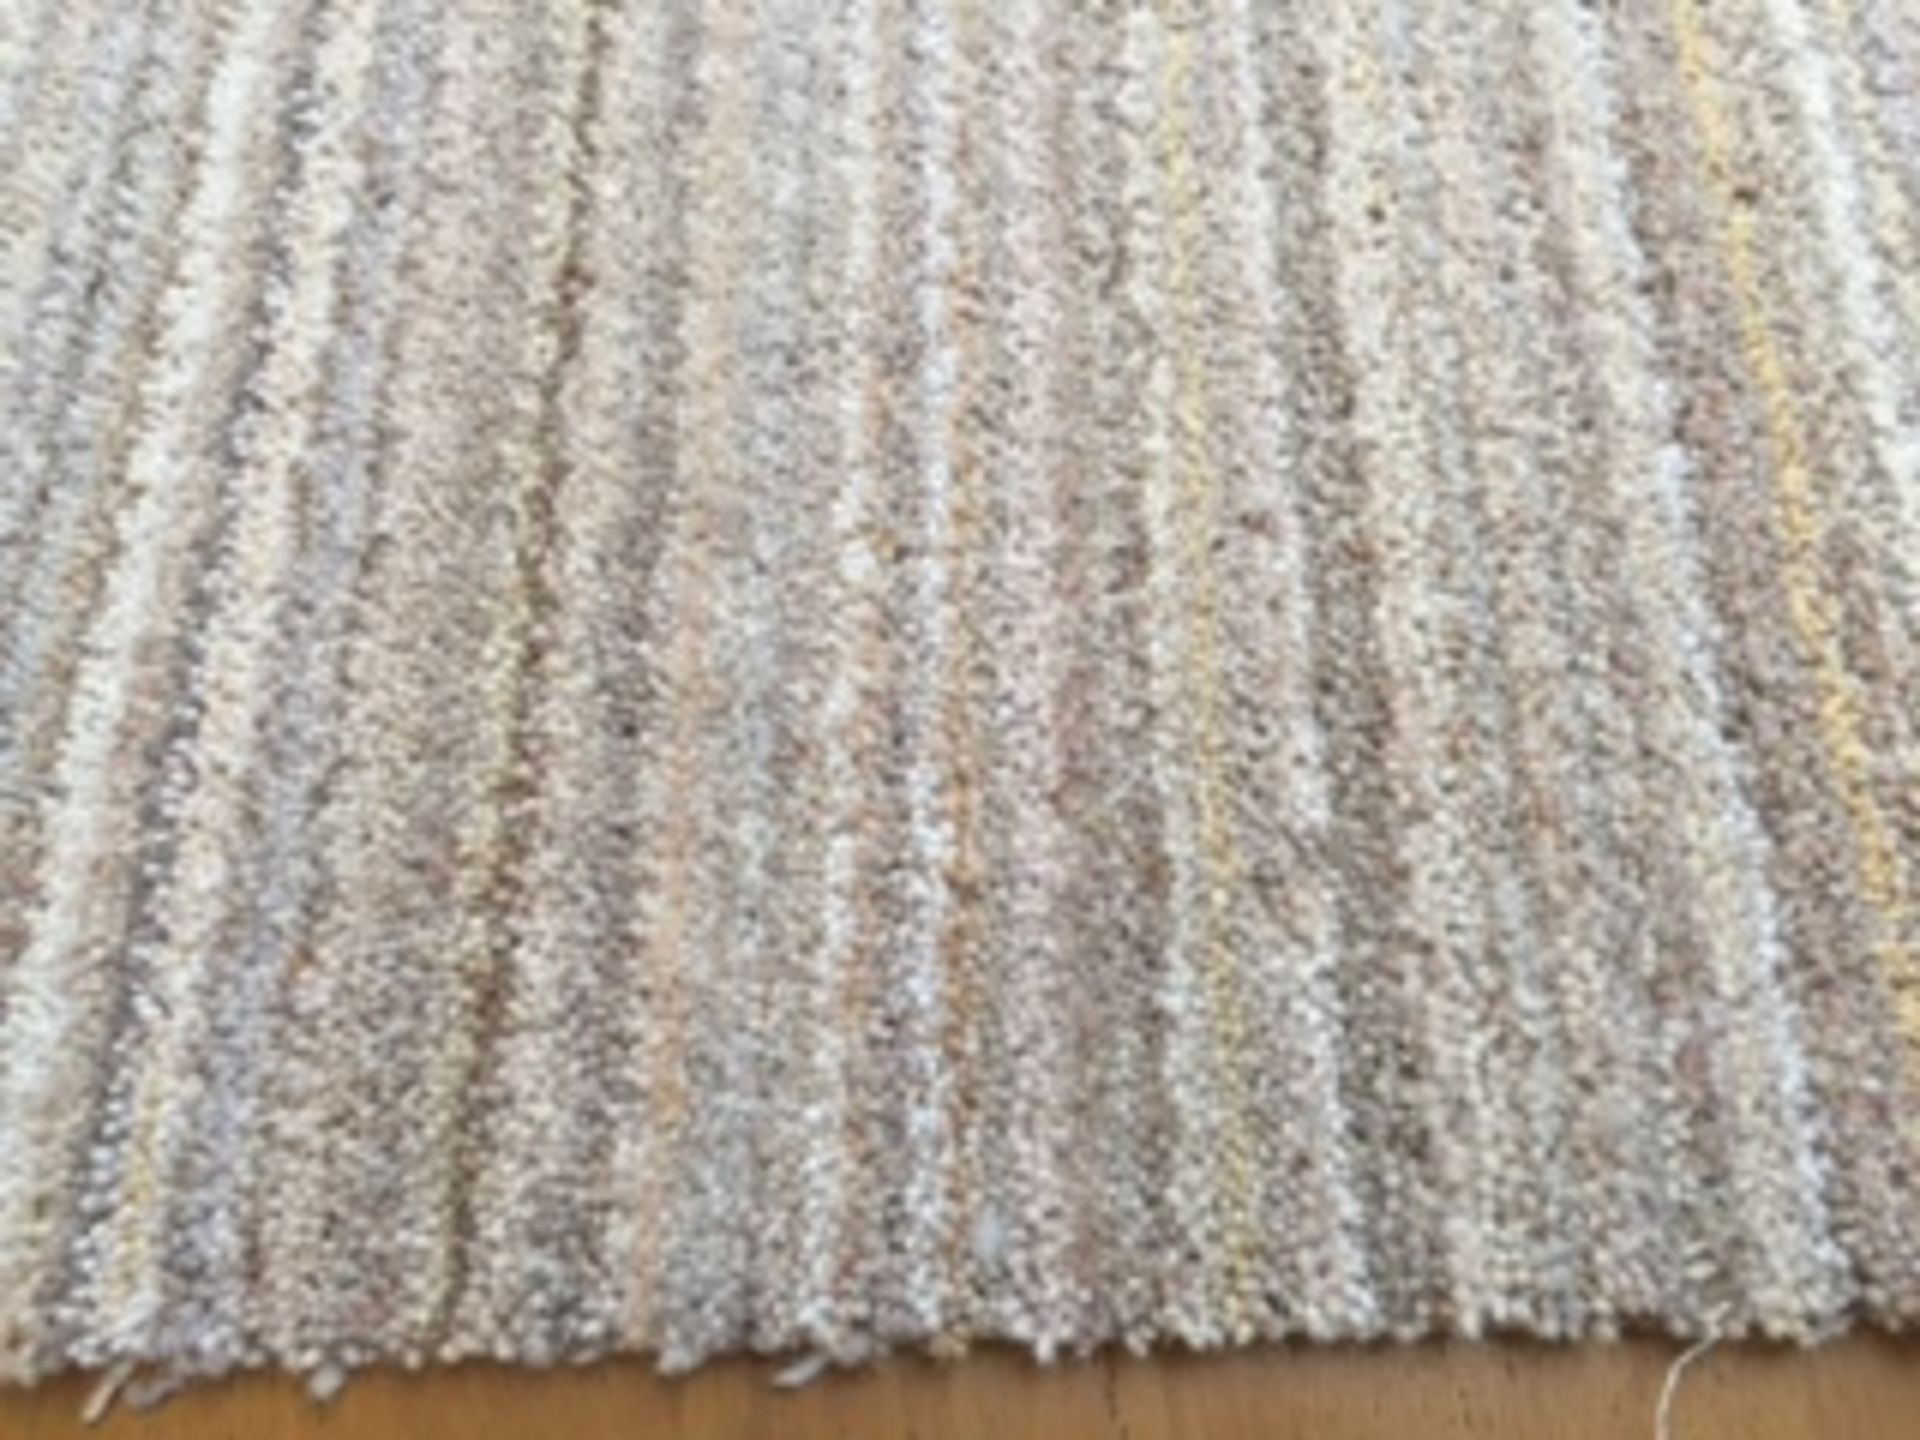 British Wool Candy Stripe - Buttermilk 25x4m - Total 100m2